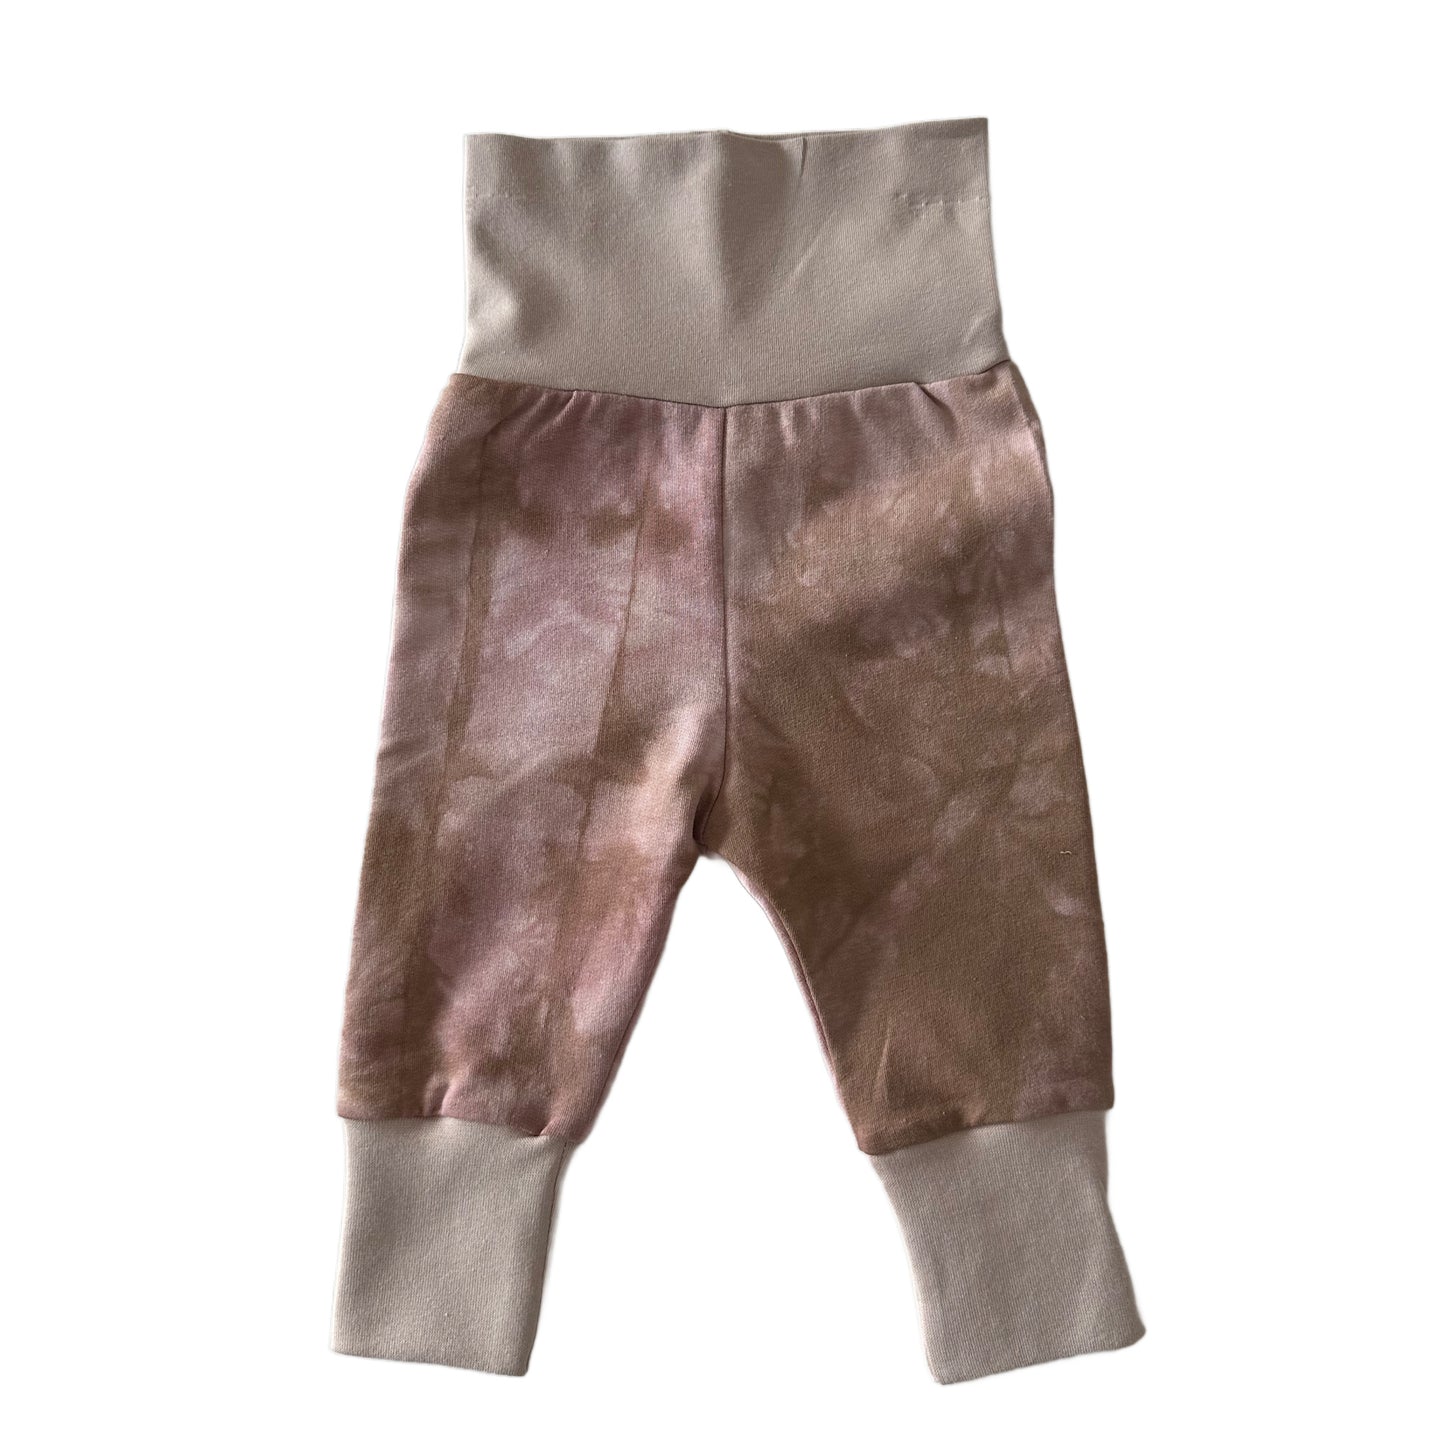 2-Piece Matching Wrap Jacket Joggers Set Blush Pink Cotton Tie Dye Infant Size 6-12M